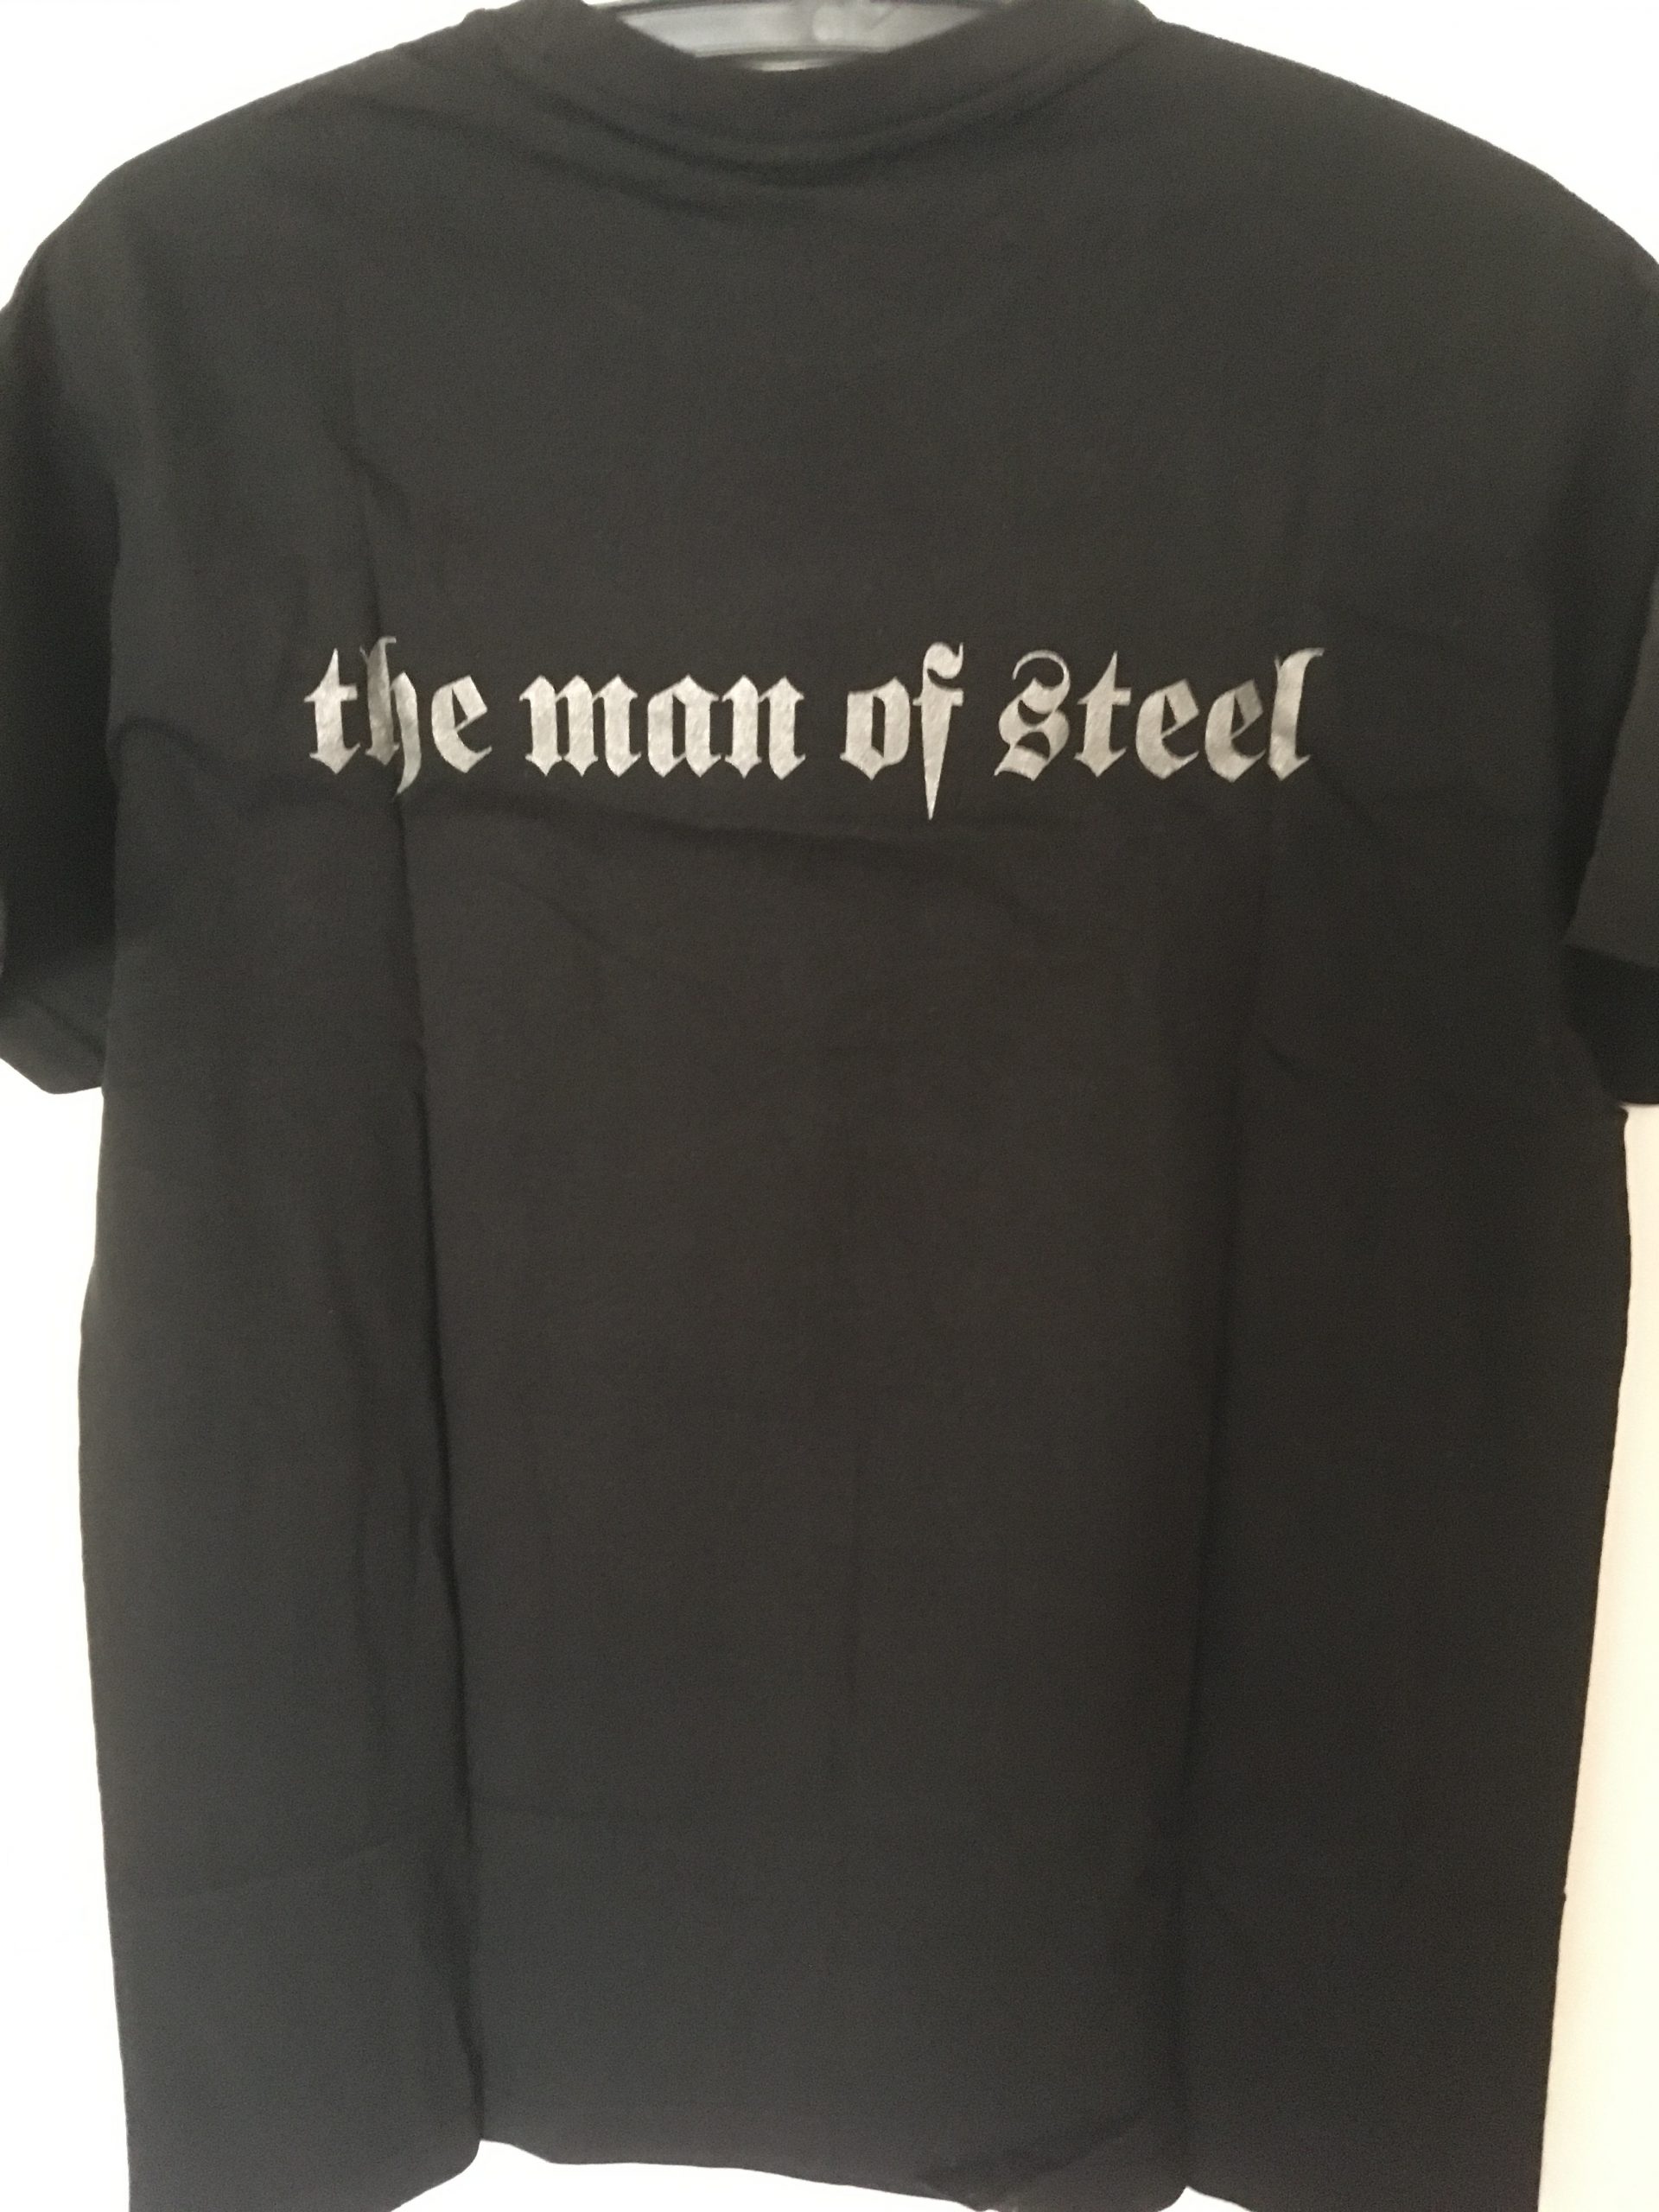 Spiritus Mortis T-Shirt back print the man of steel